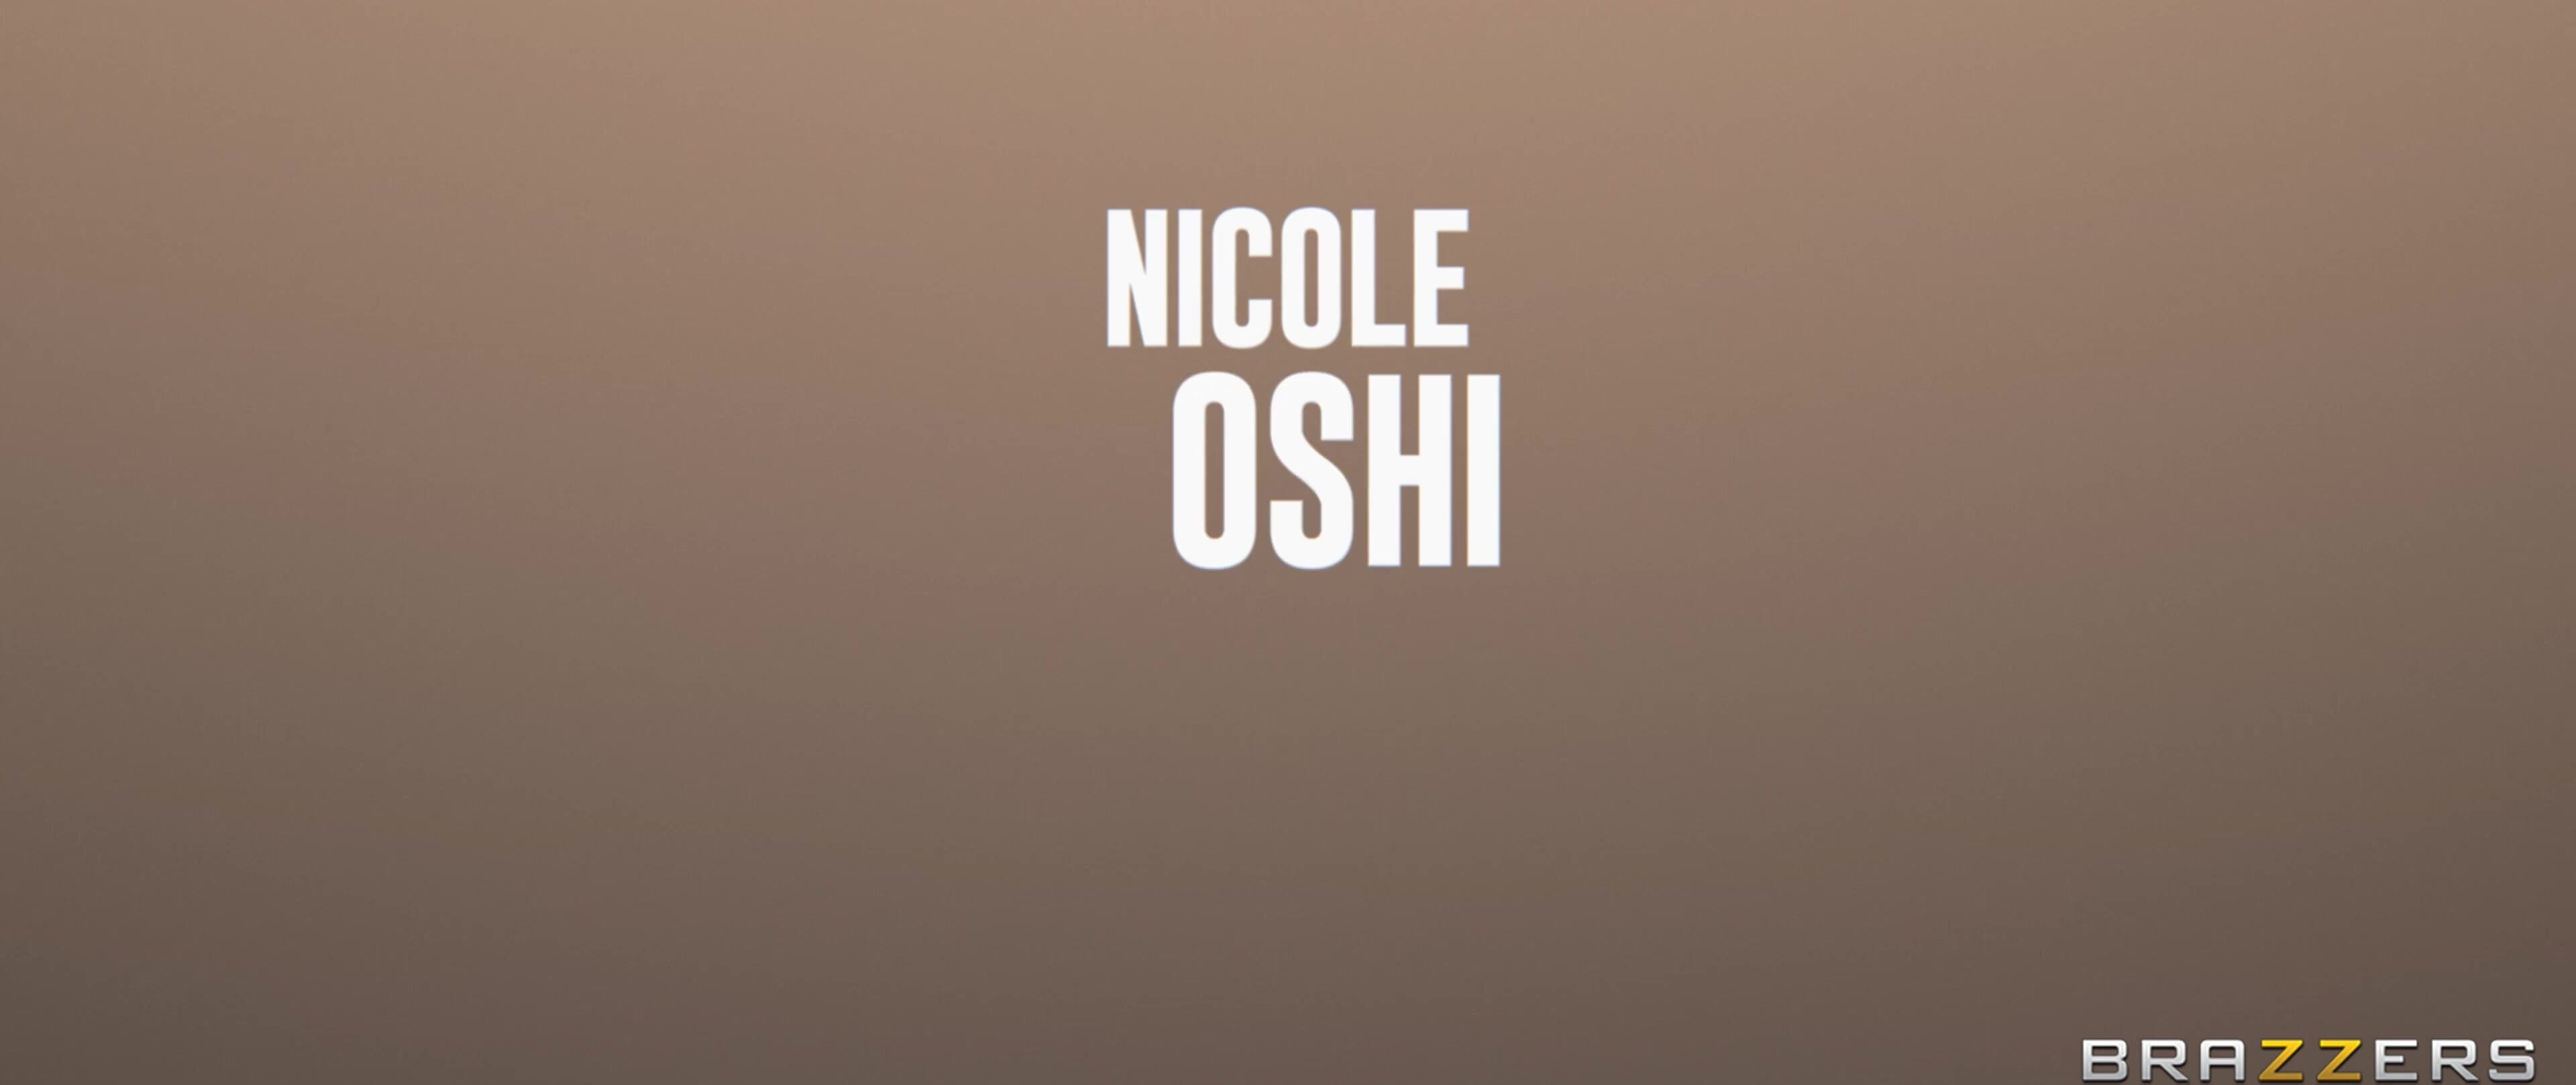 Nicole Doshi - Backdoor Delivery in 4K